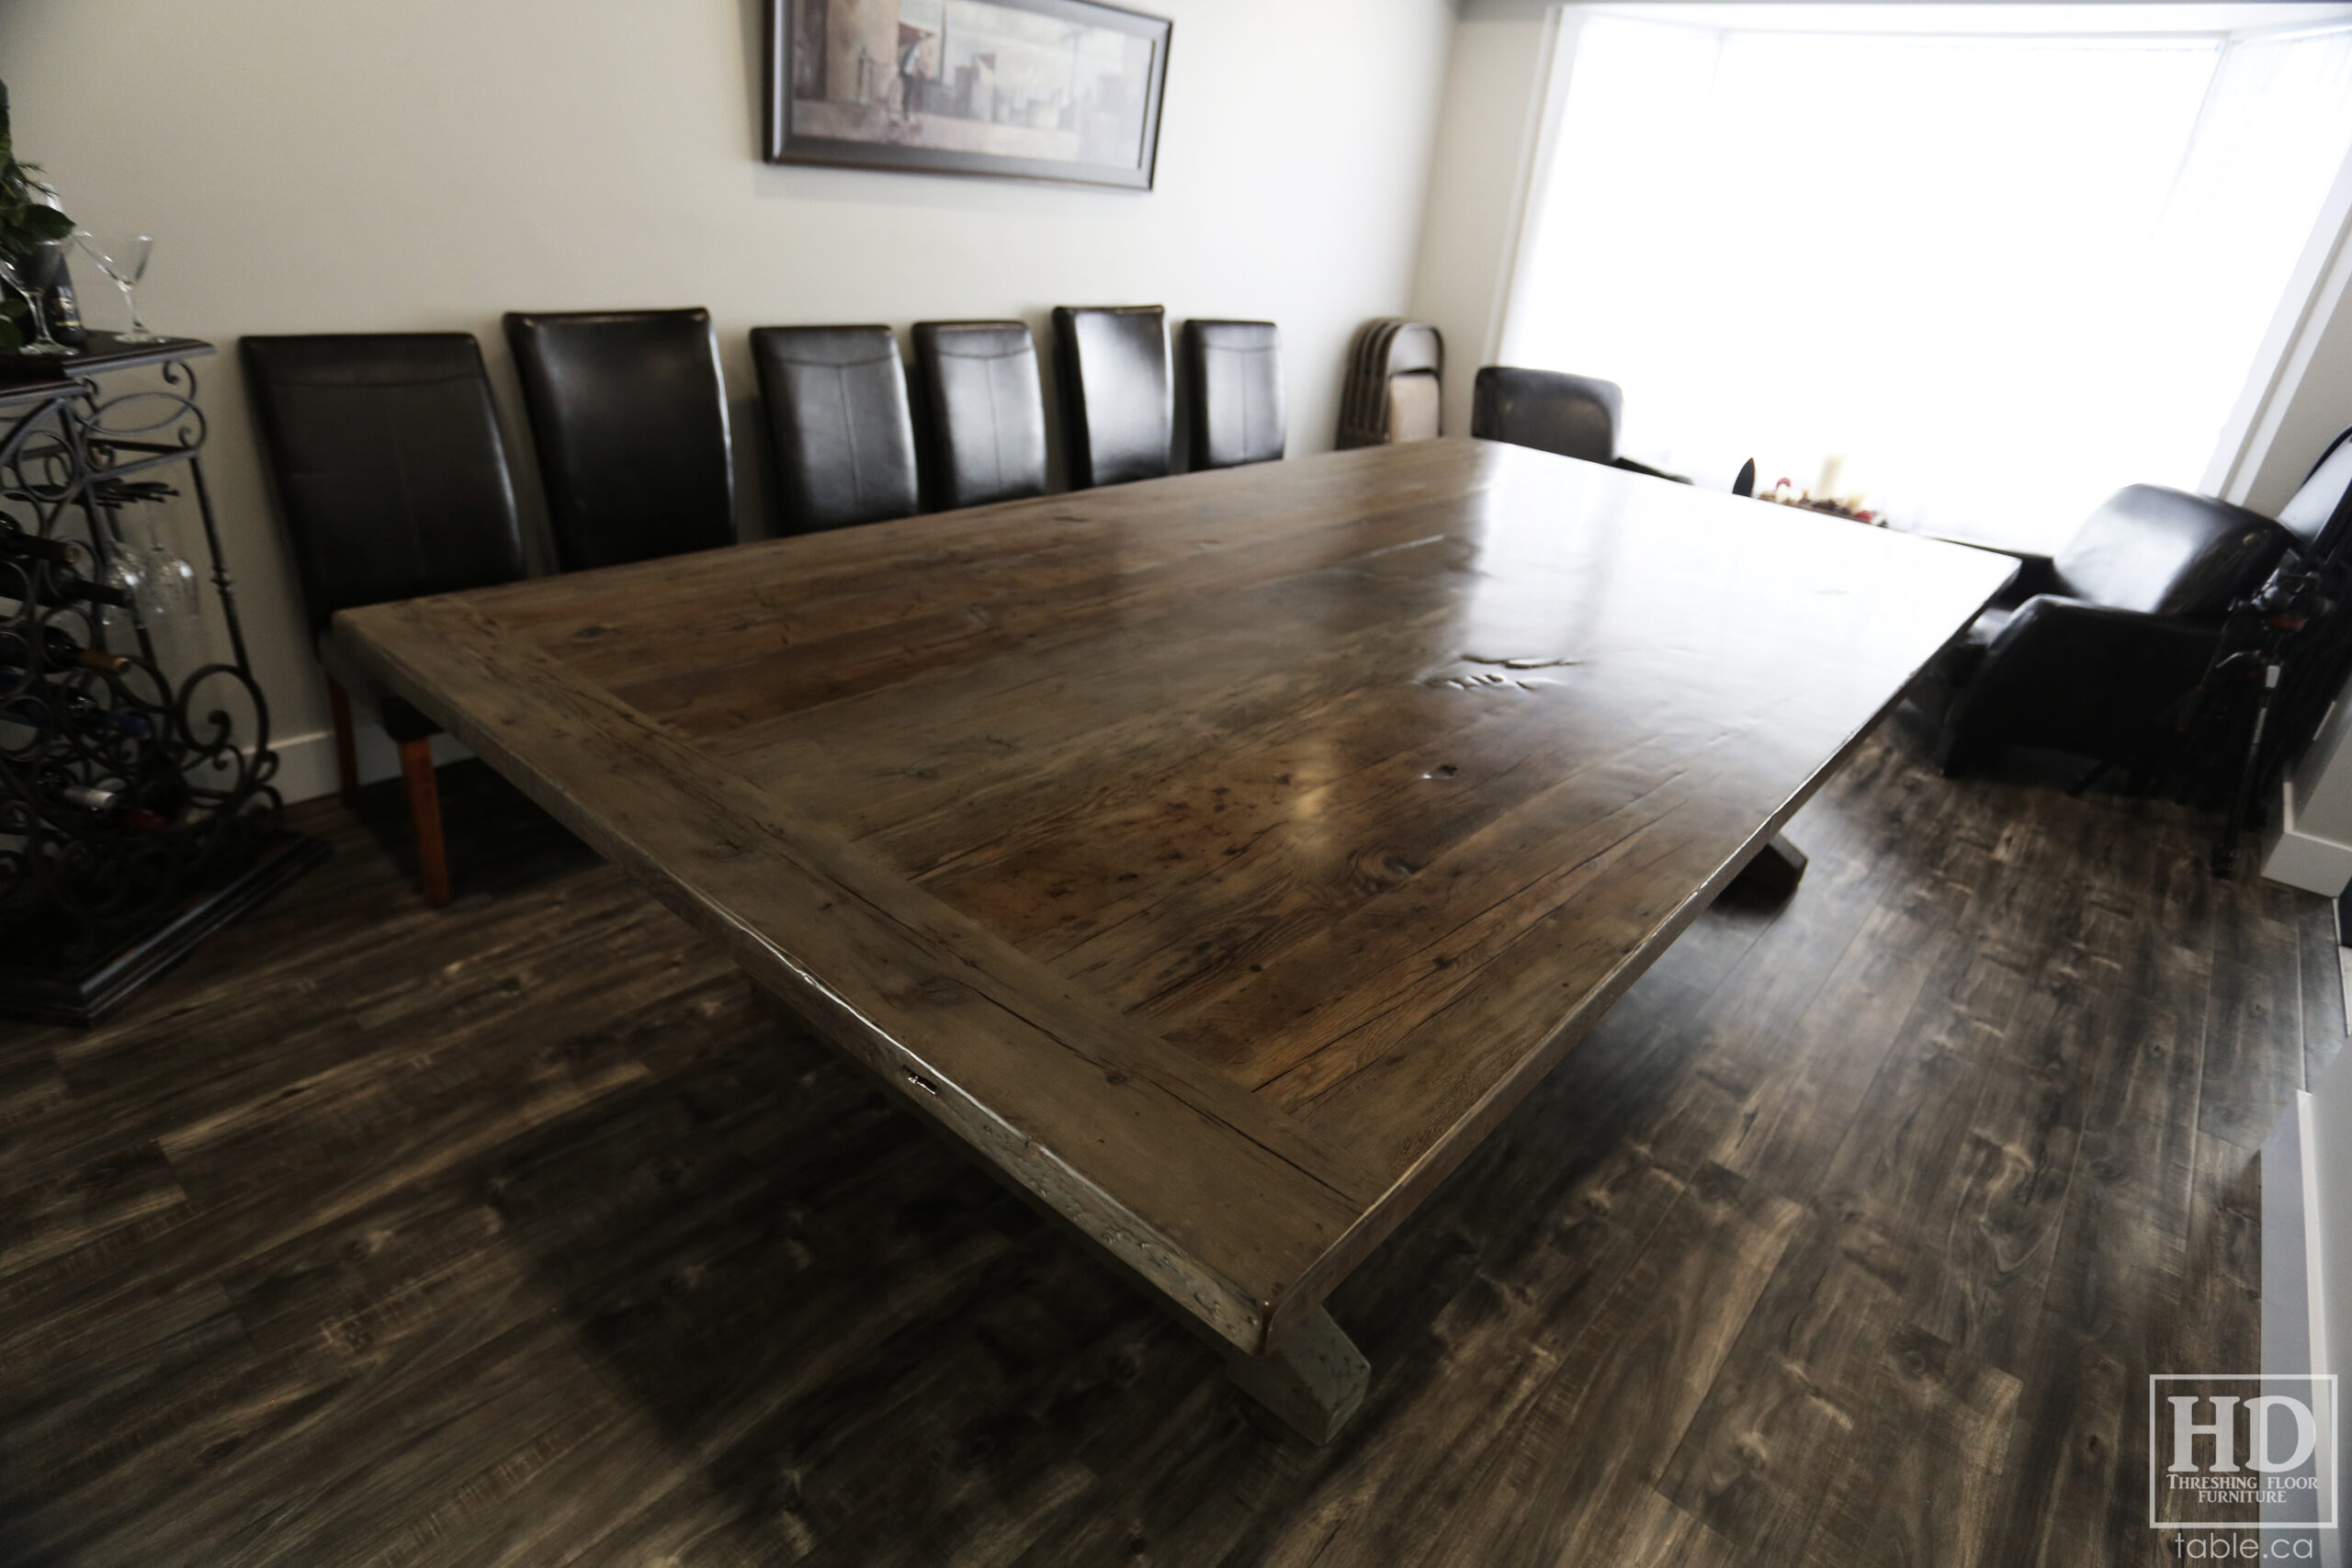 Grey Barnwood Table by HD Threshing Floor Furniture / www.table.ca